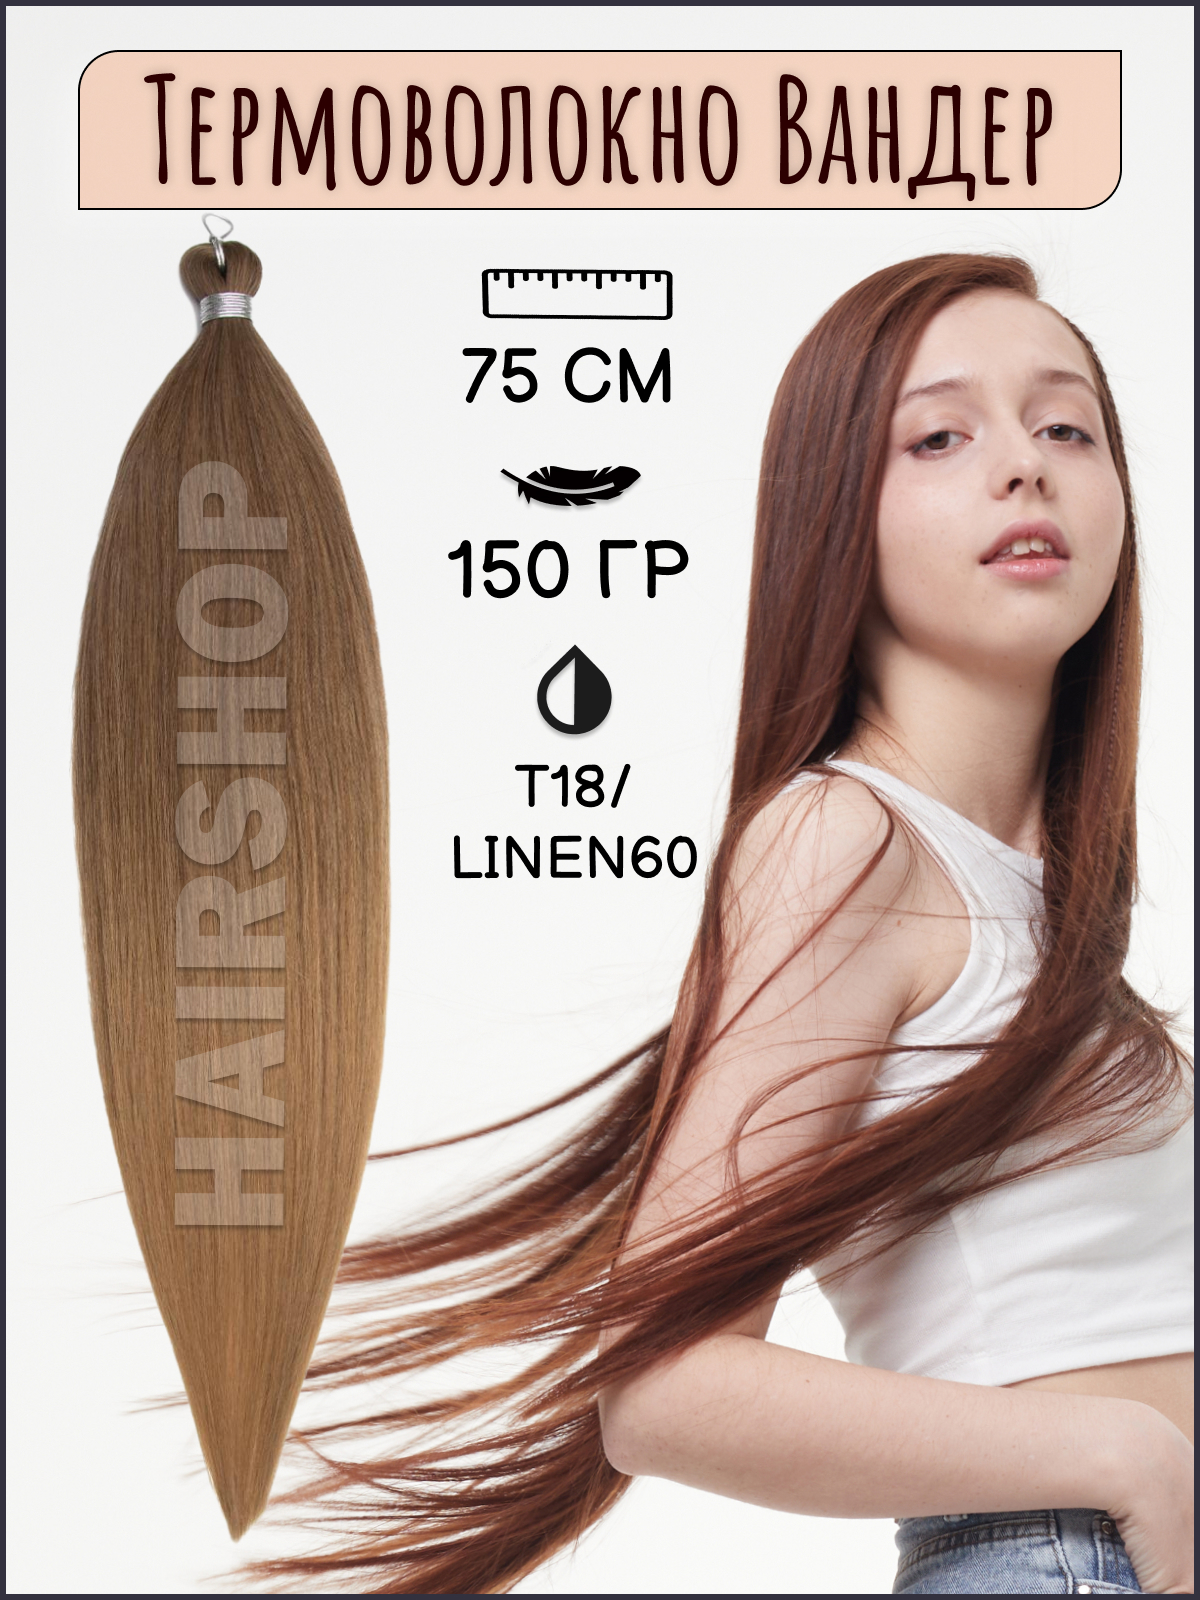 Термоволокно для наращивания Hairshop Вандер T18Linen60 150г 150см орехи и семена арахис дробленный 150г